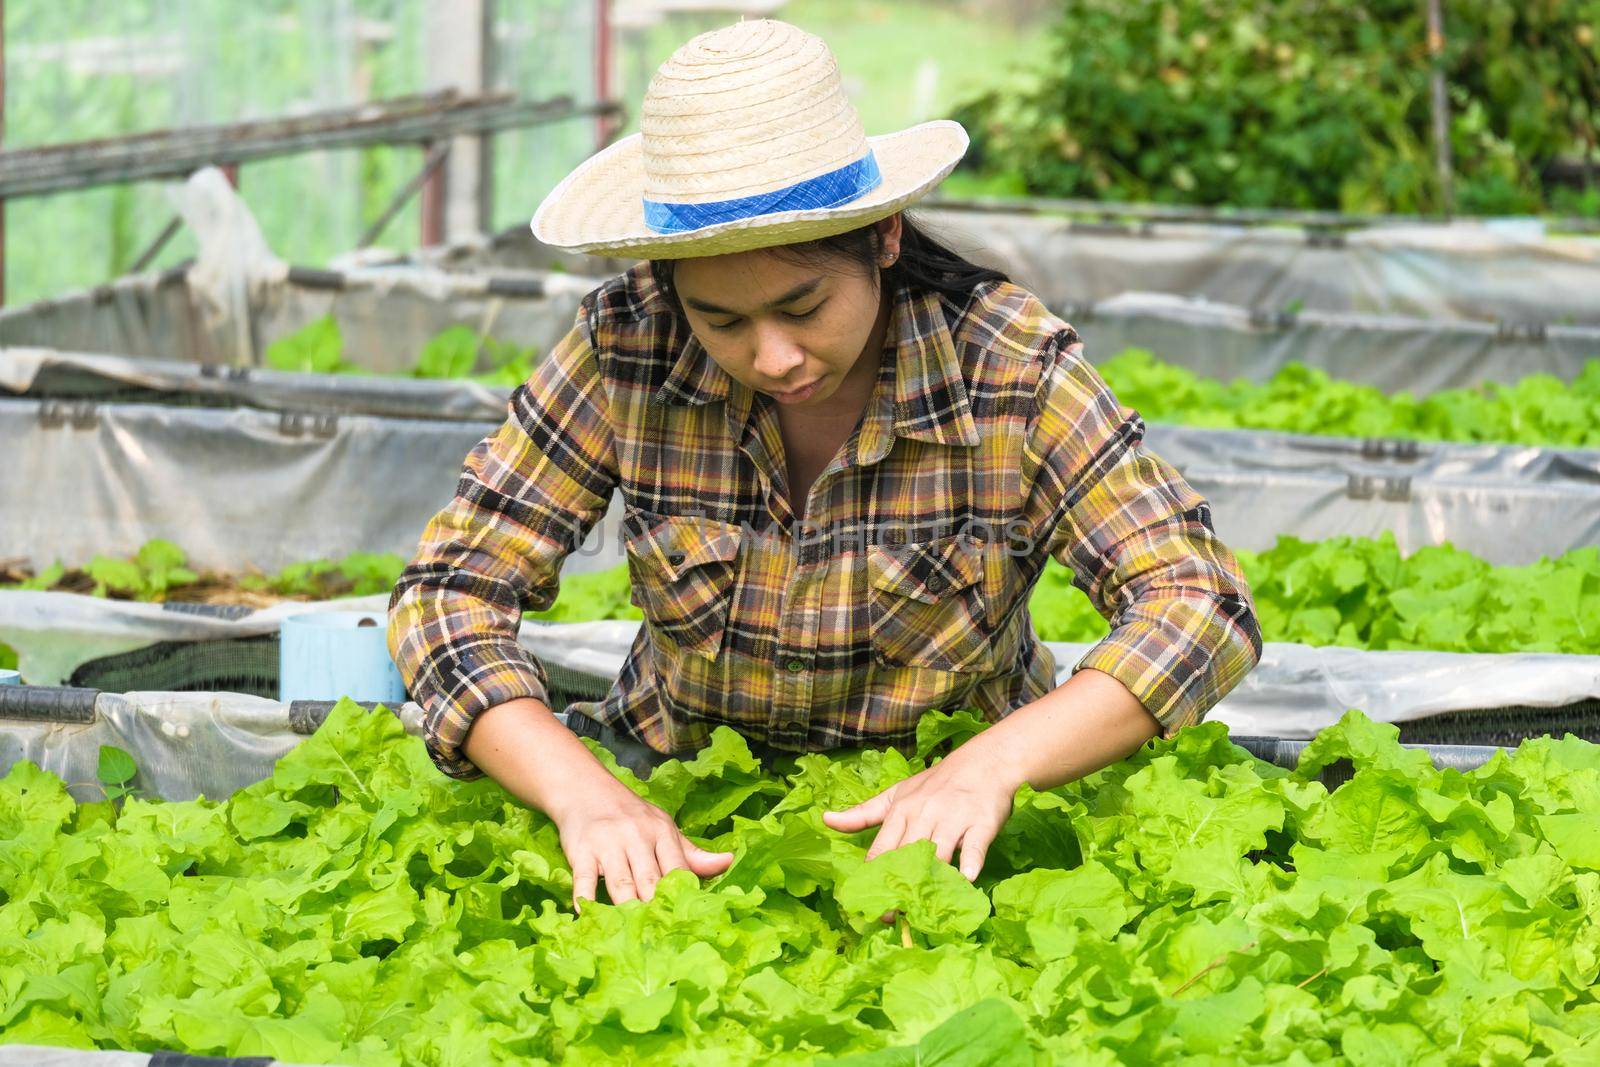 A woman gardener caring for organic vegetable in the home vegetable garden. Female farmer working at her organic farm. Home gardening and grow vegetable concept.